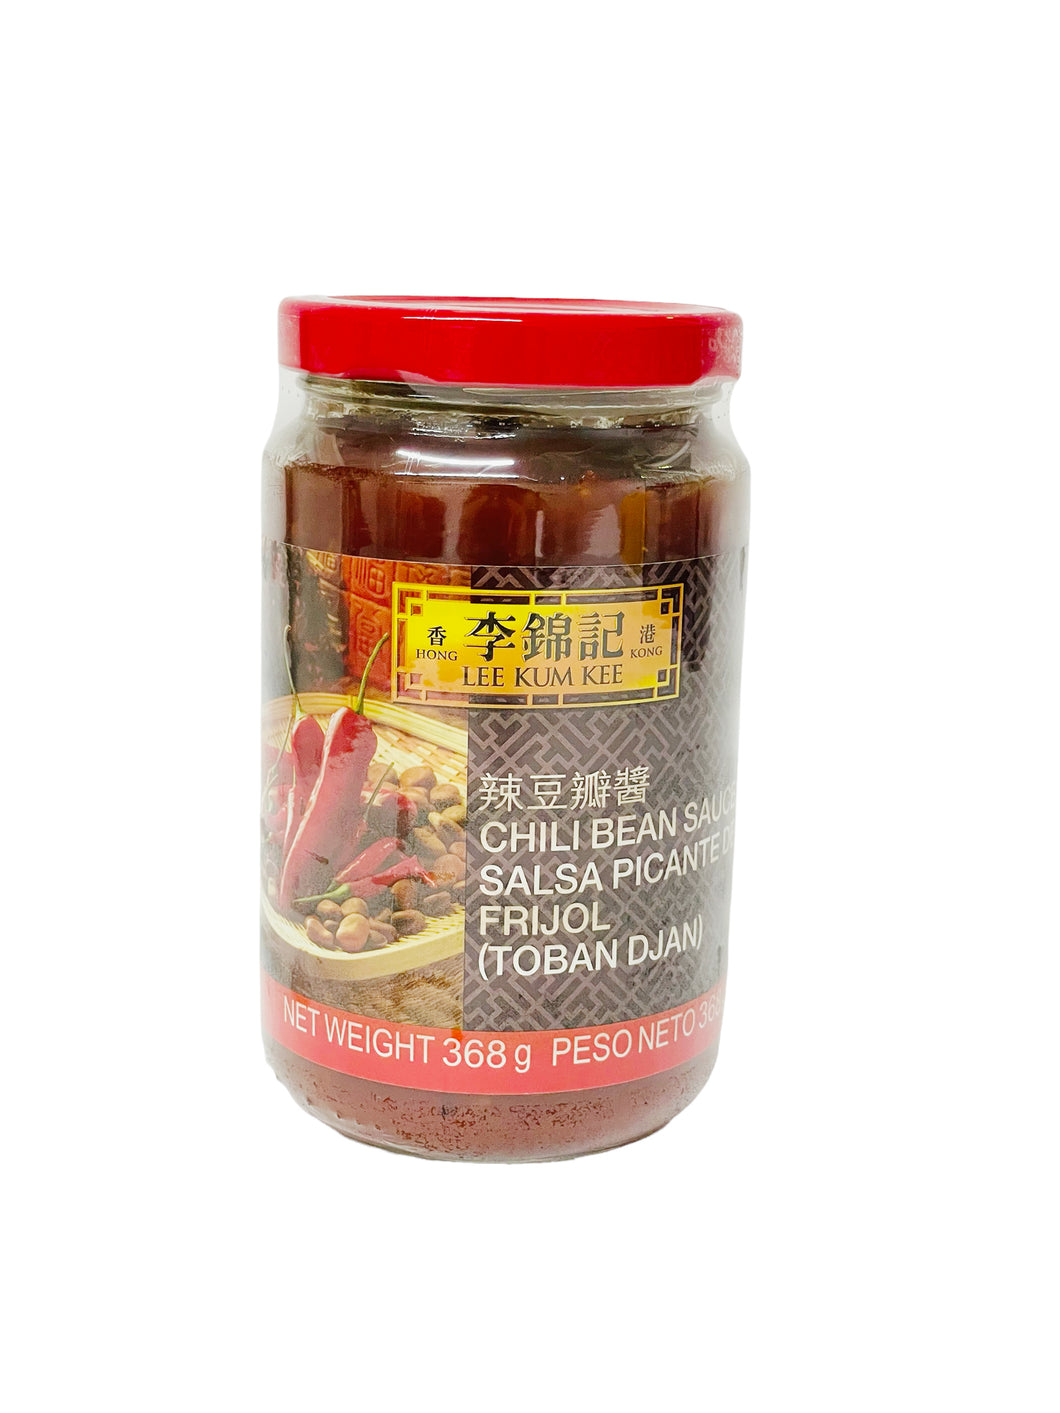 LKK Chili Bean Sauce 368g李锦记豆瓣酱